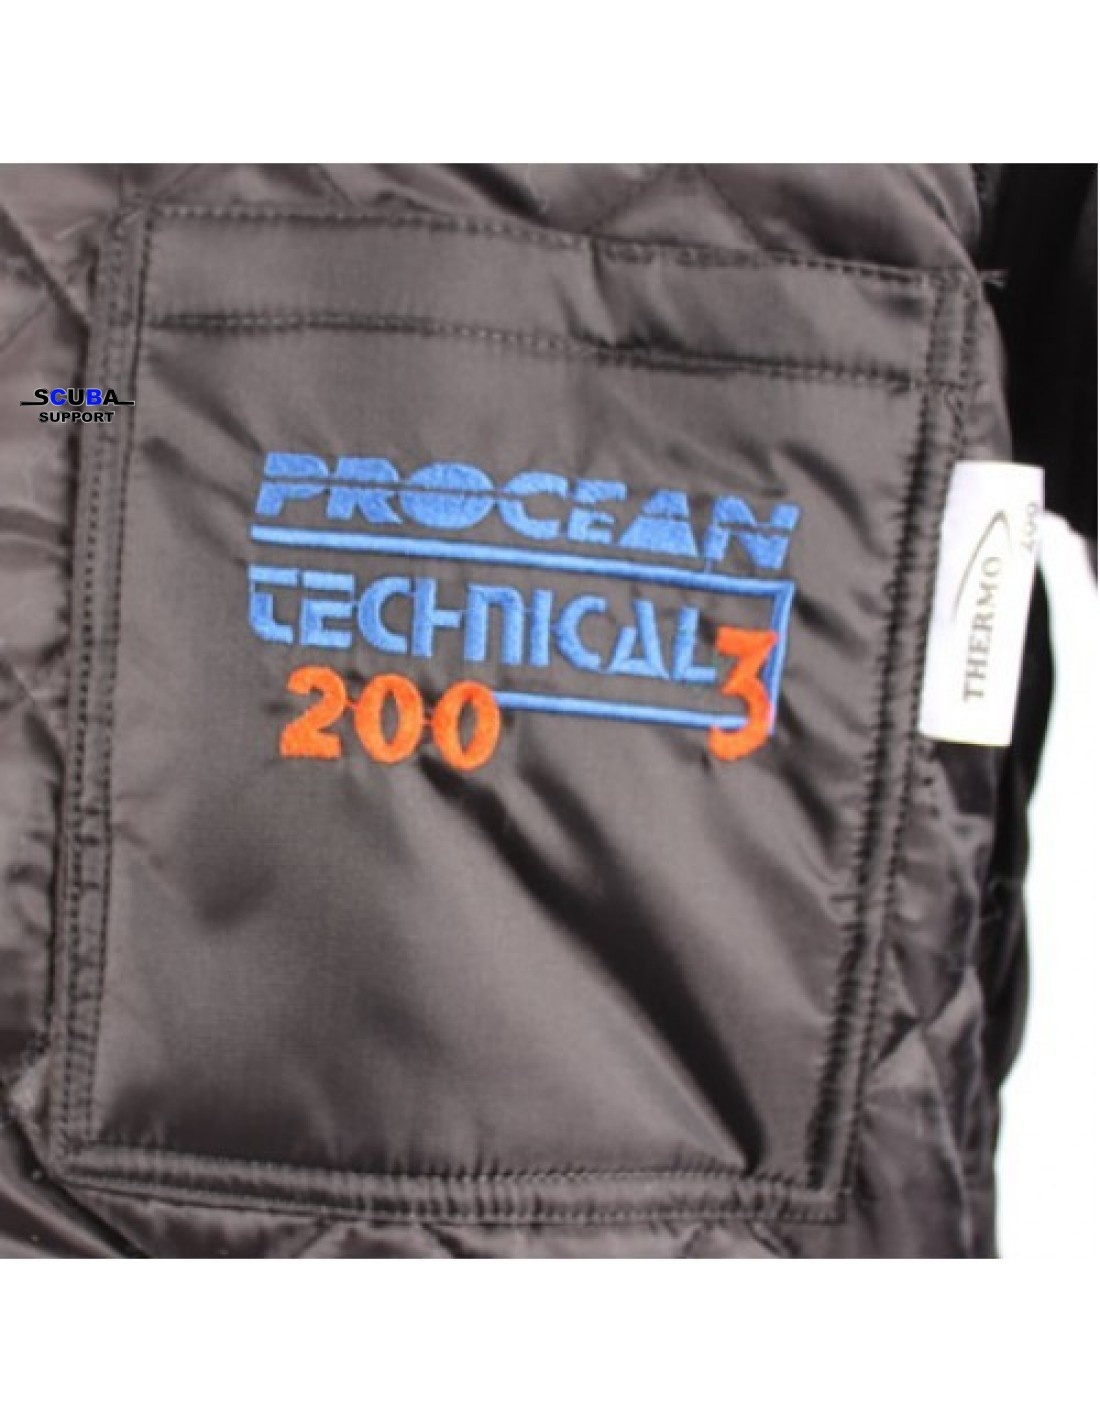 Procean Technical undersuit 200 grs - Scuba Support